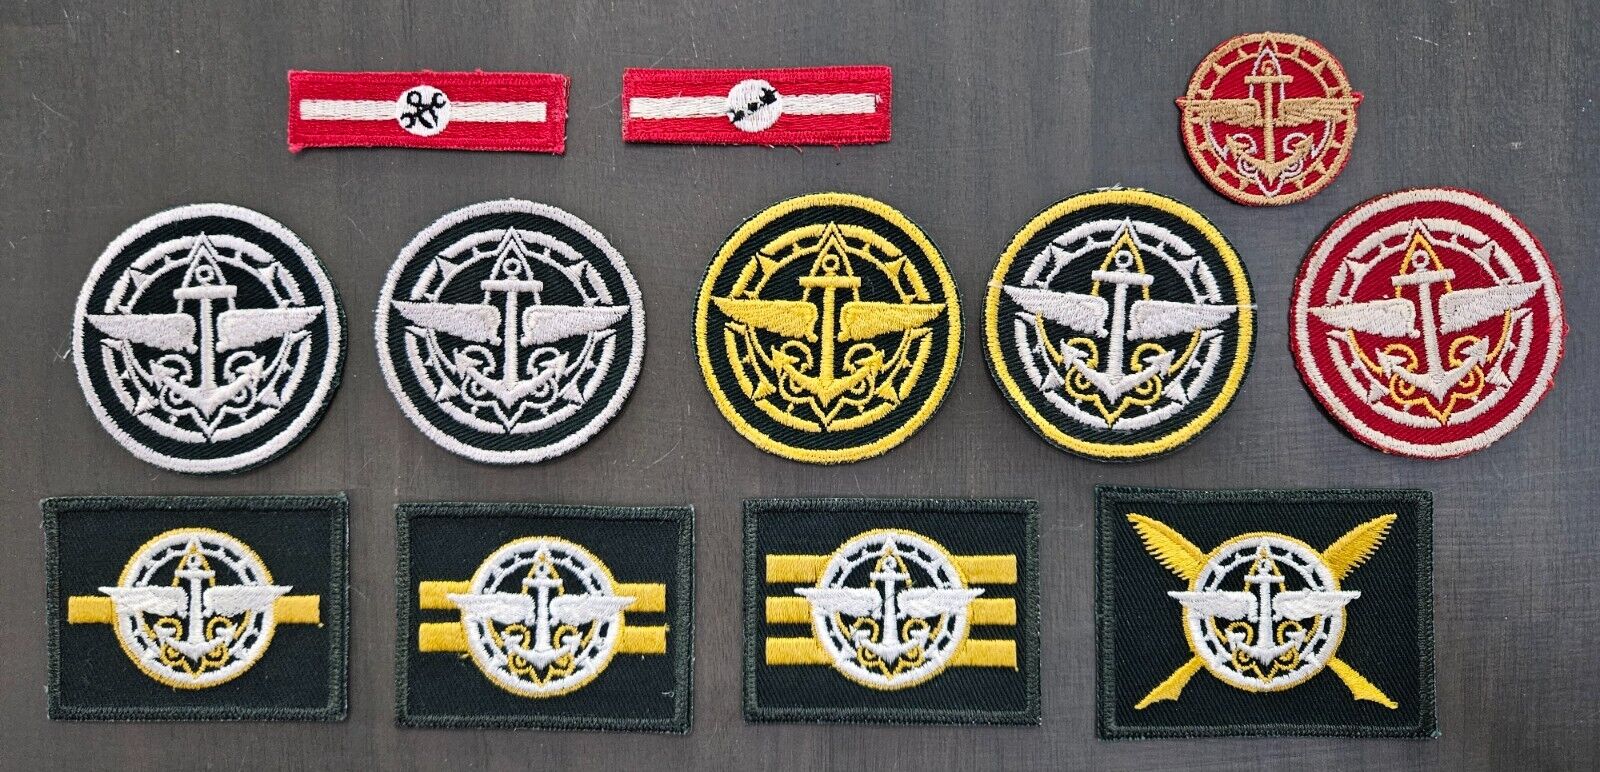 Boy Scouts of America BSA 1950's Explorer Post Rank Uniform Patch Set of 12